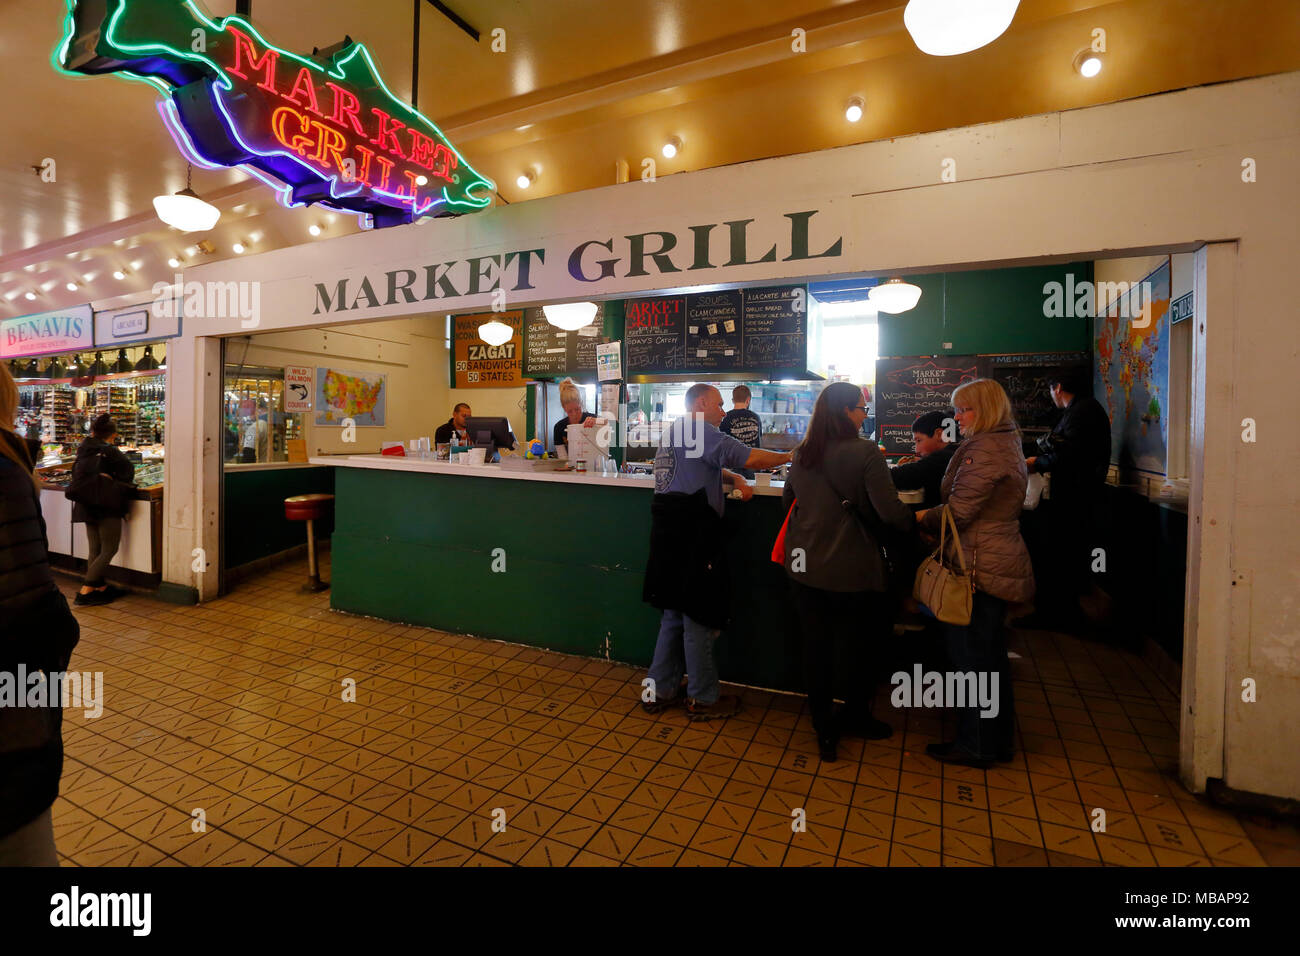 Market Grill in Pike Place Market, Seattle, Washington. interior. Stock Photo